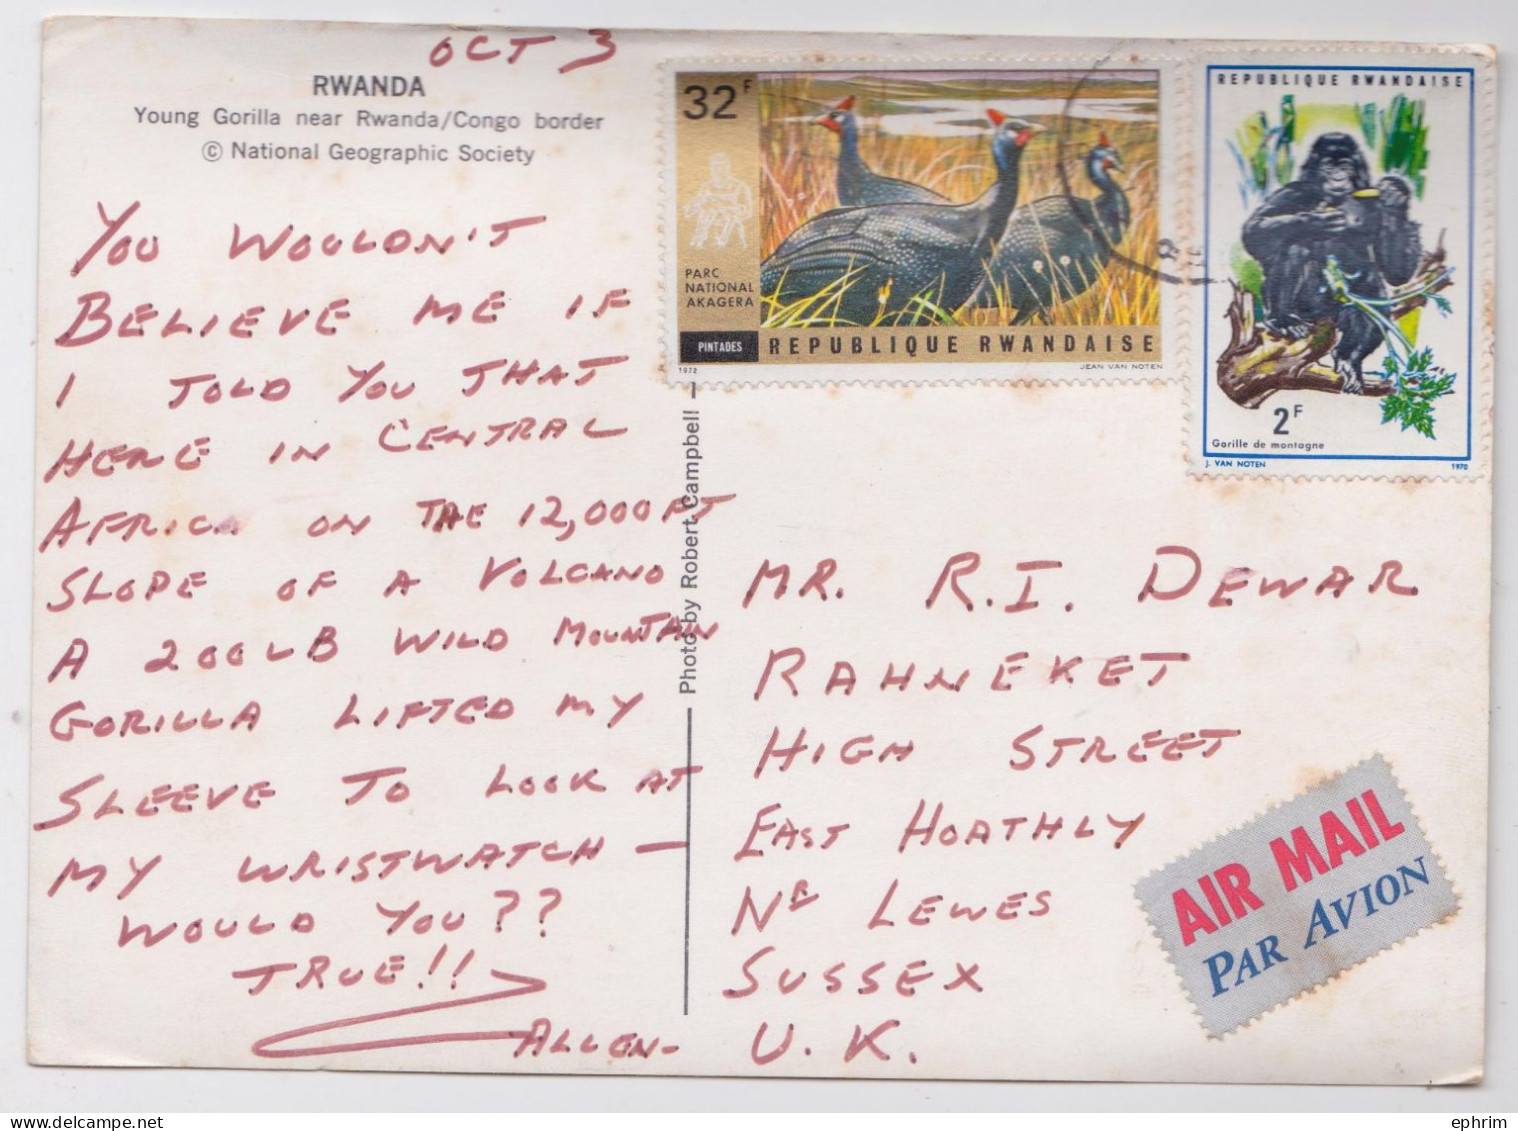 Rwanda Ruanda Carte Postale Timbre Parc National Gorille Gorilla Stamp 1970 Air Mail Postcard - Covers & Documents